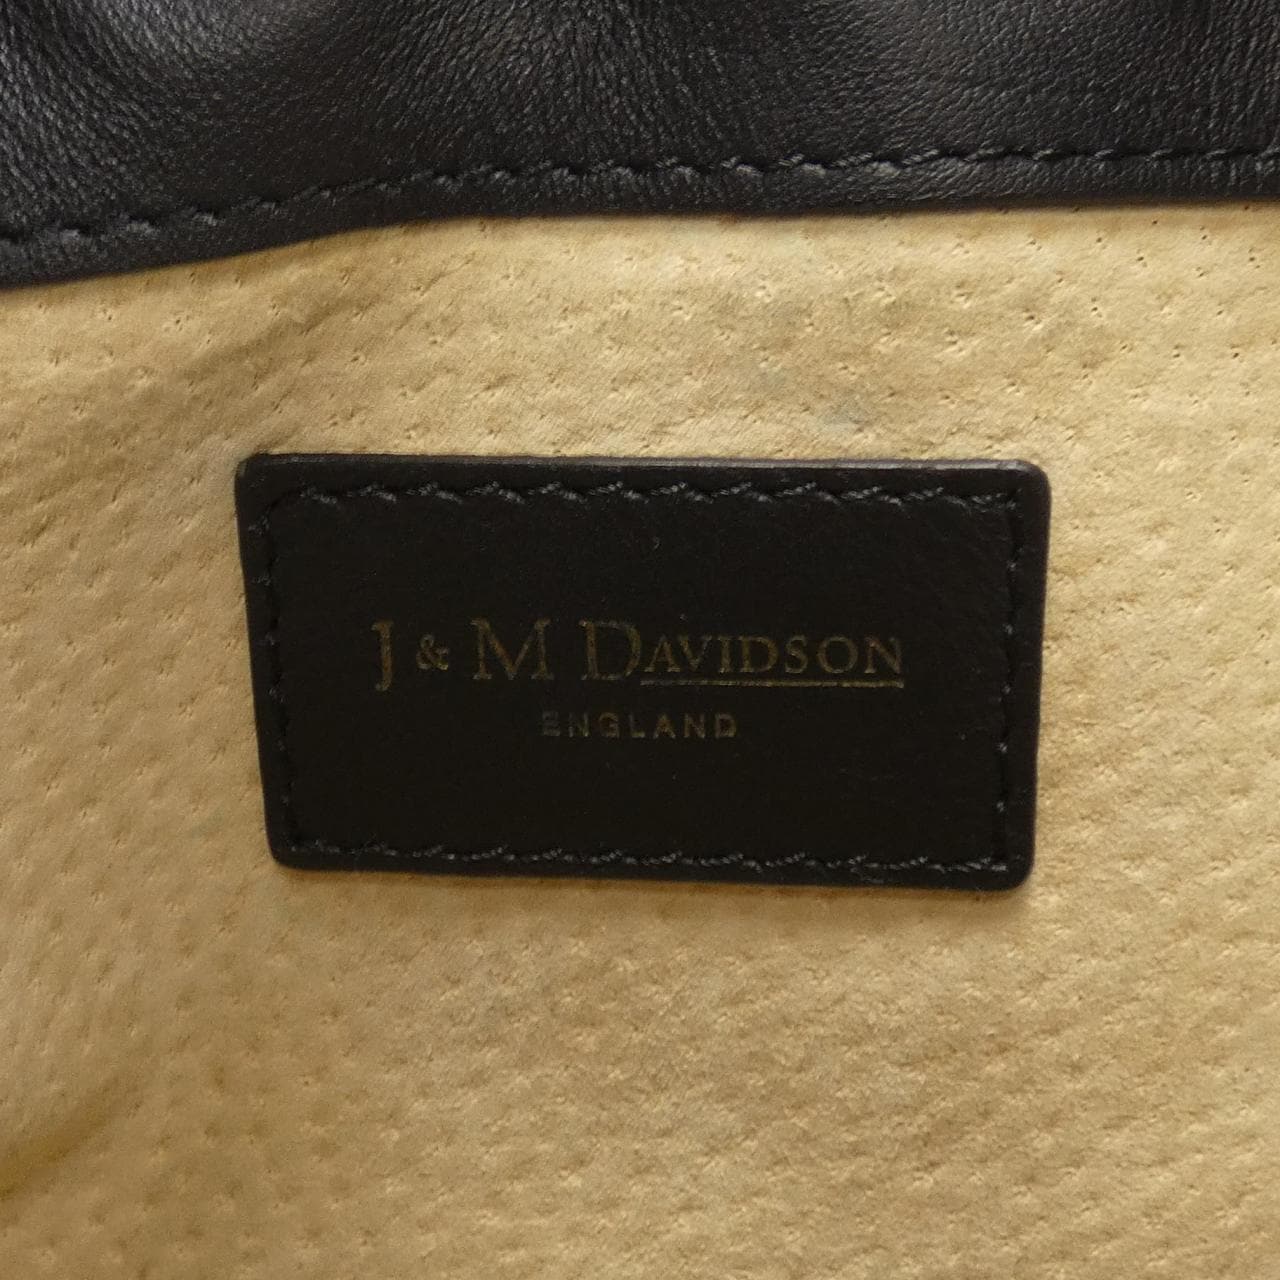 J&M Davidson J&M DAVIDSON BAG